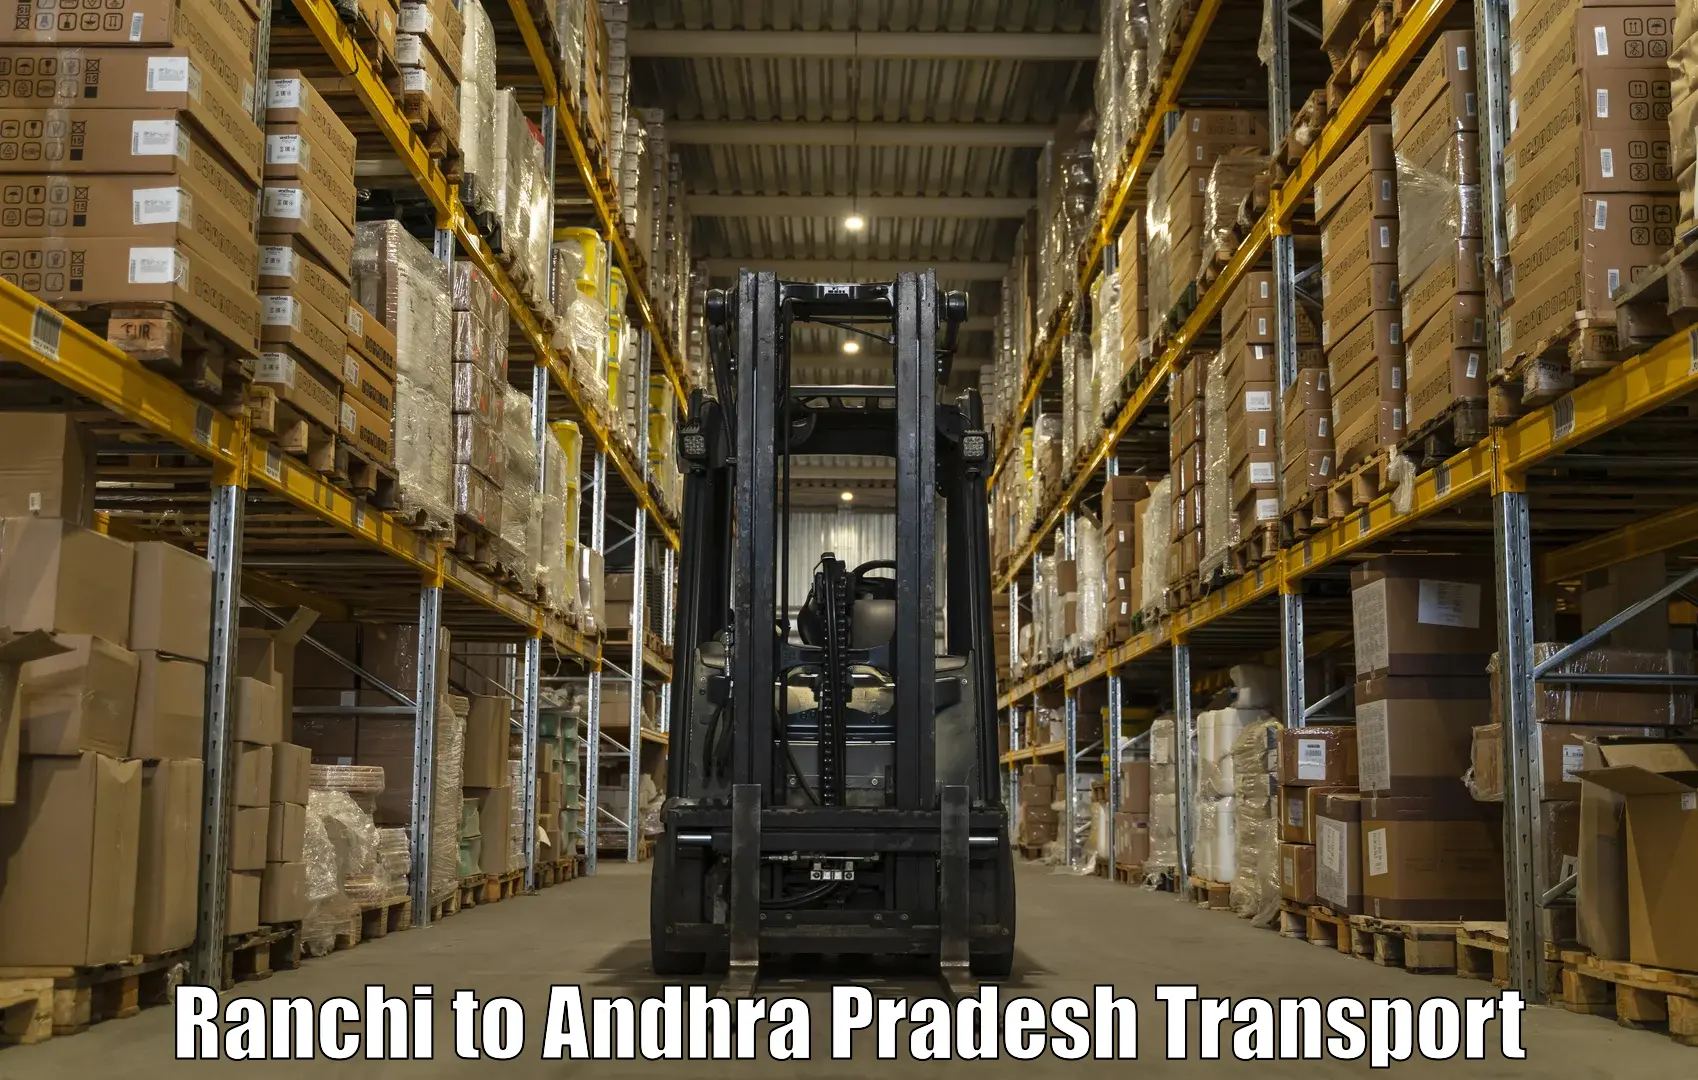 Transport in sharing in Ranchi to Chodavaram